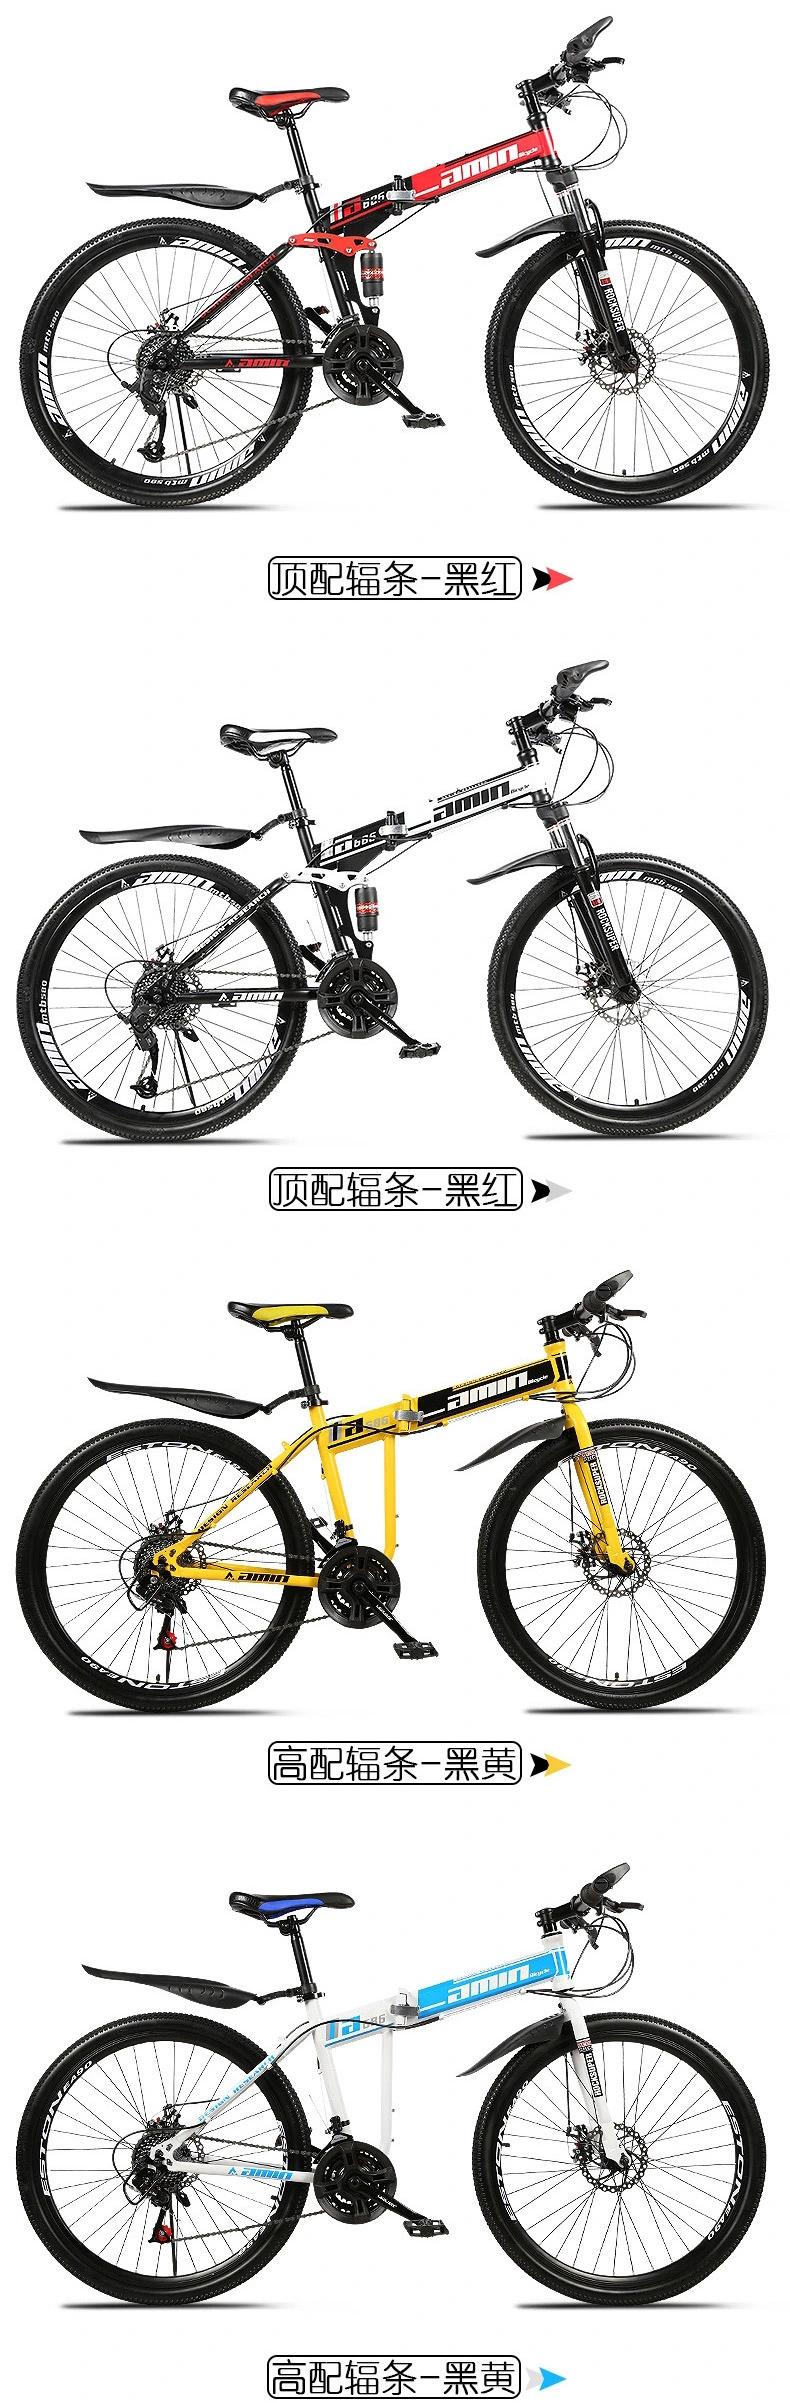 Best Selling Foldable Mountain Bike, Urban Leisure Sports Bike